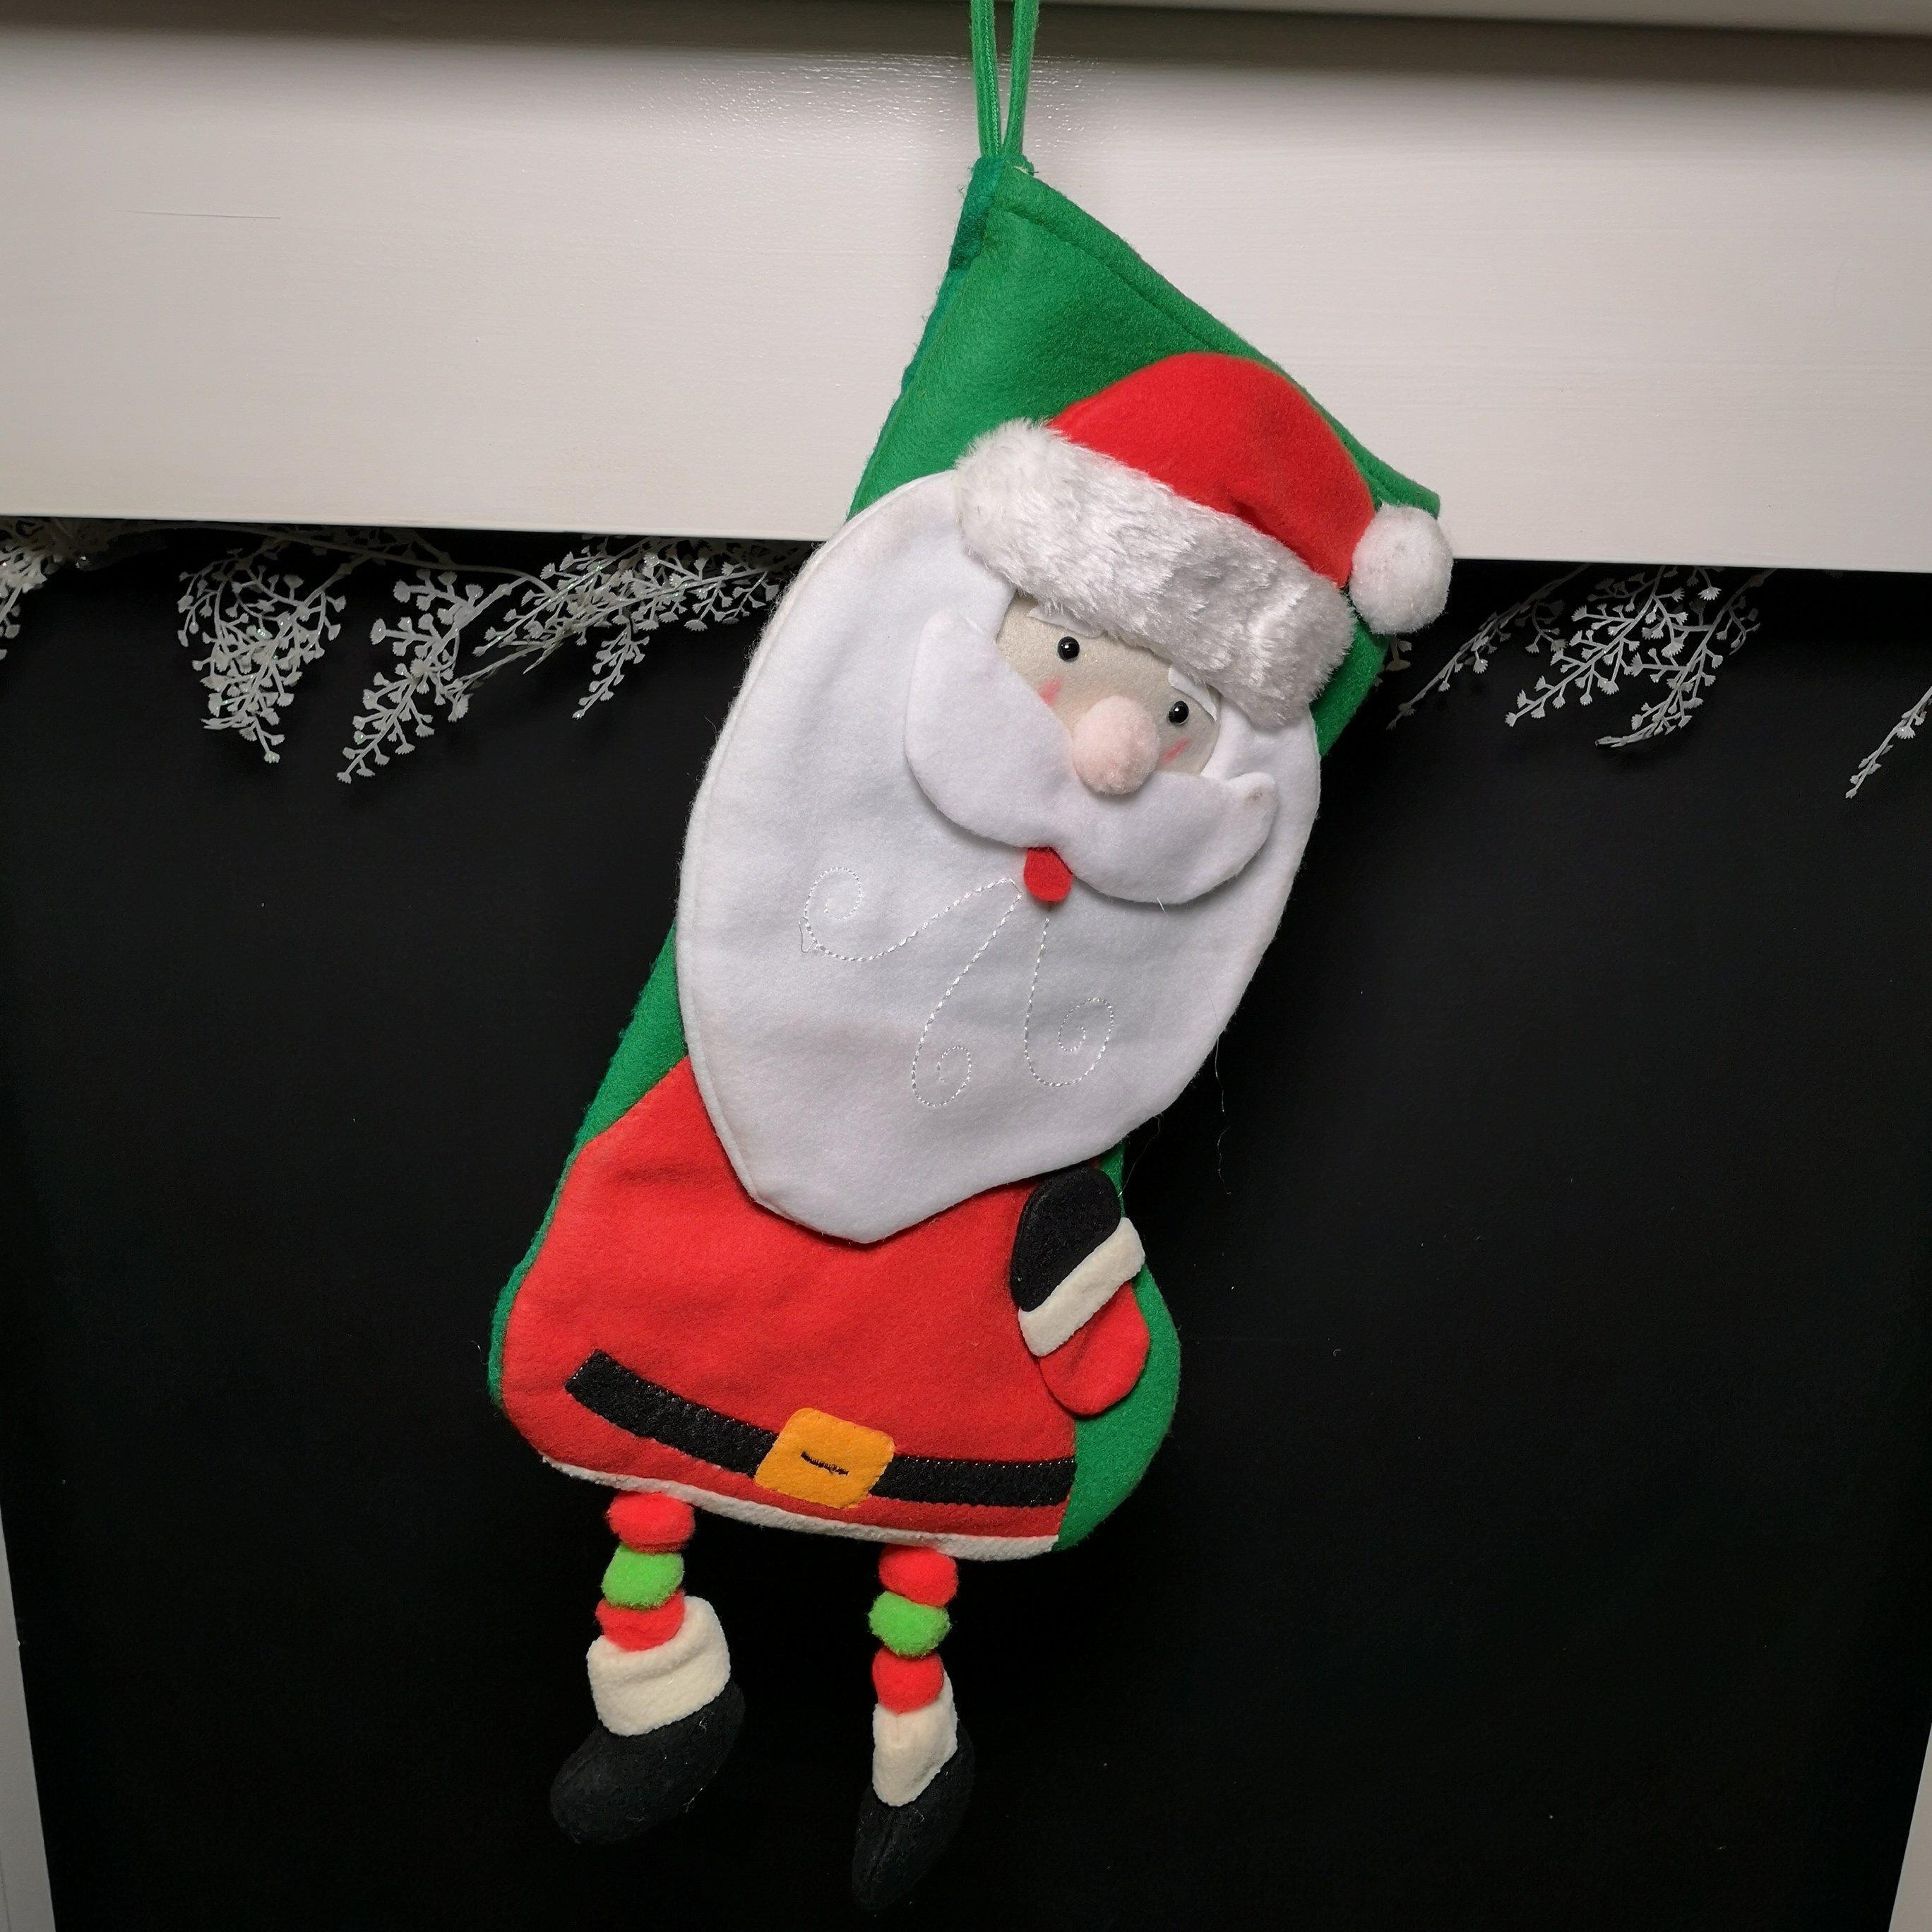 40cm Christmas Stocking Hanging Decoration in 3D Santa Design - image 1